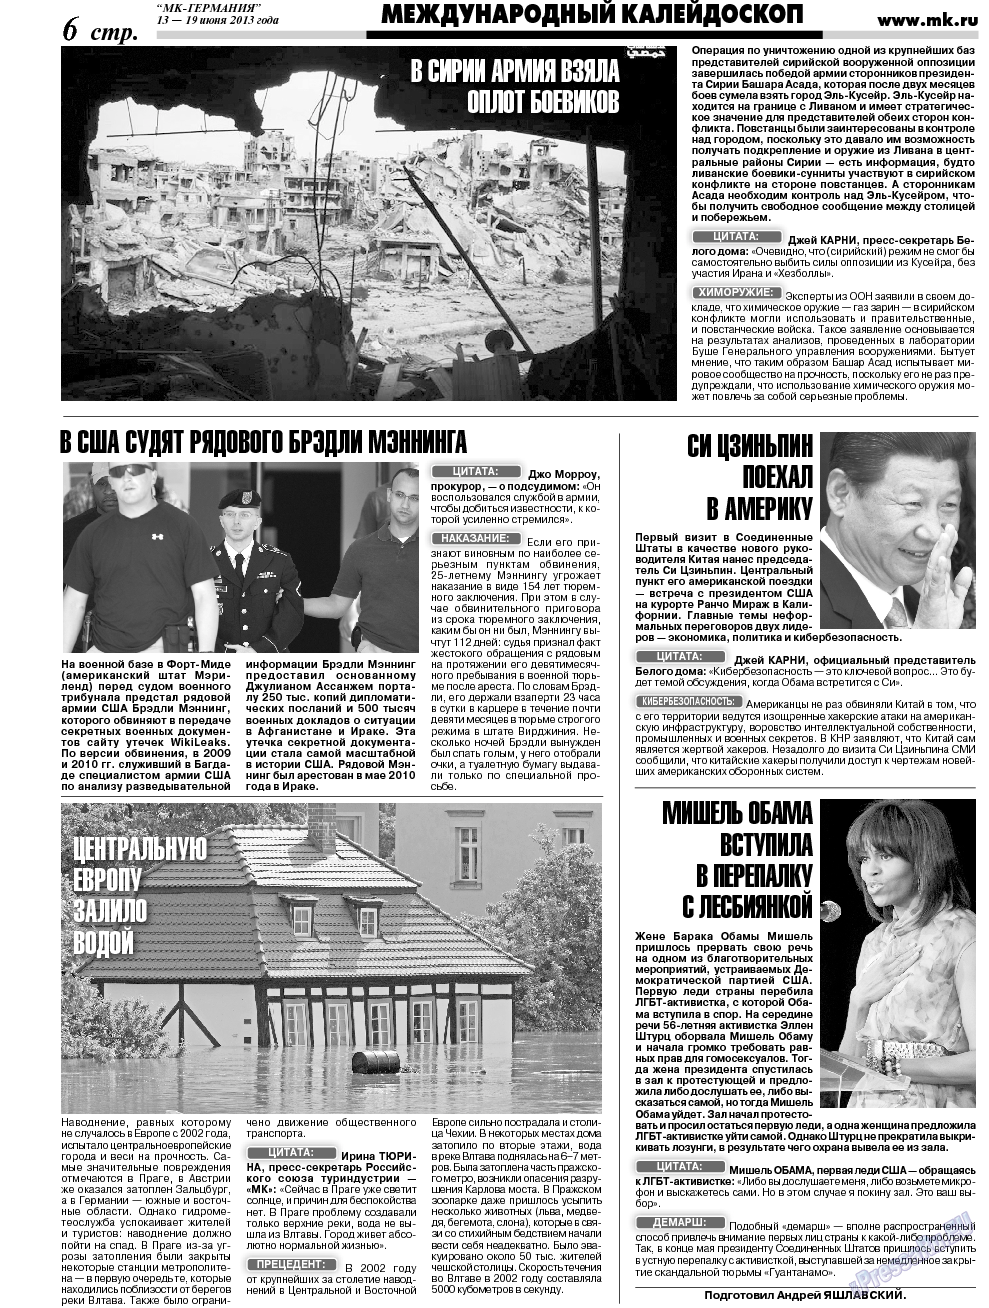 МК-Германия, газета. 2013 №24 стр.6